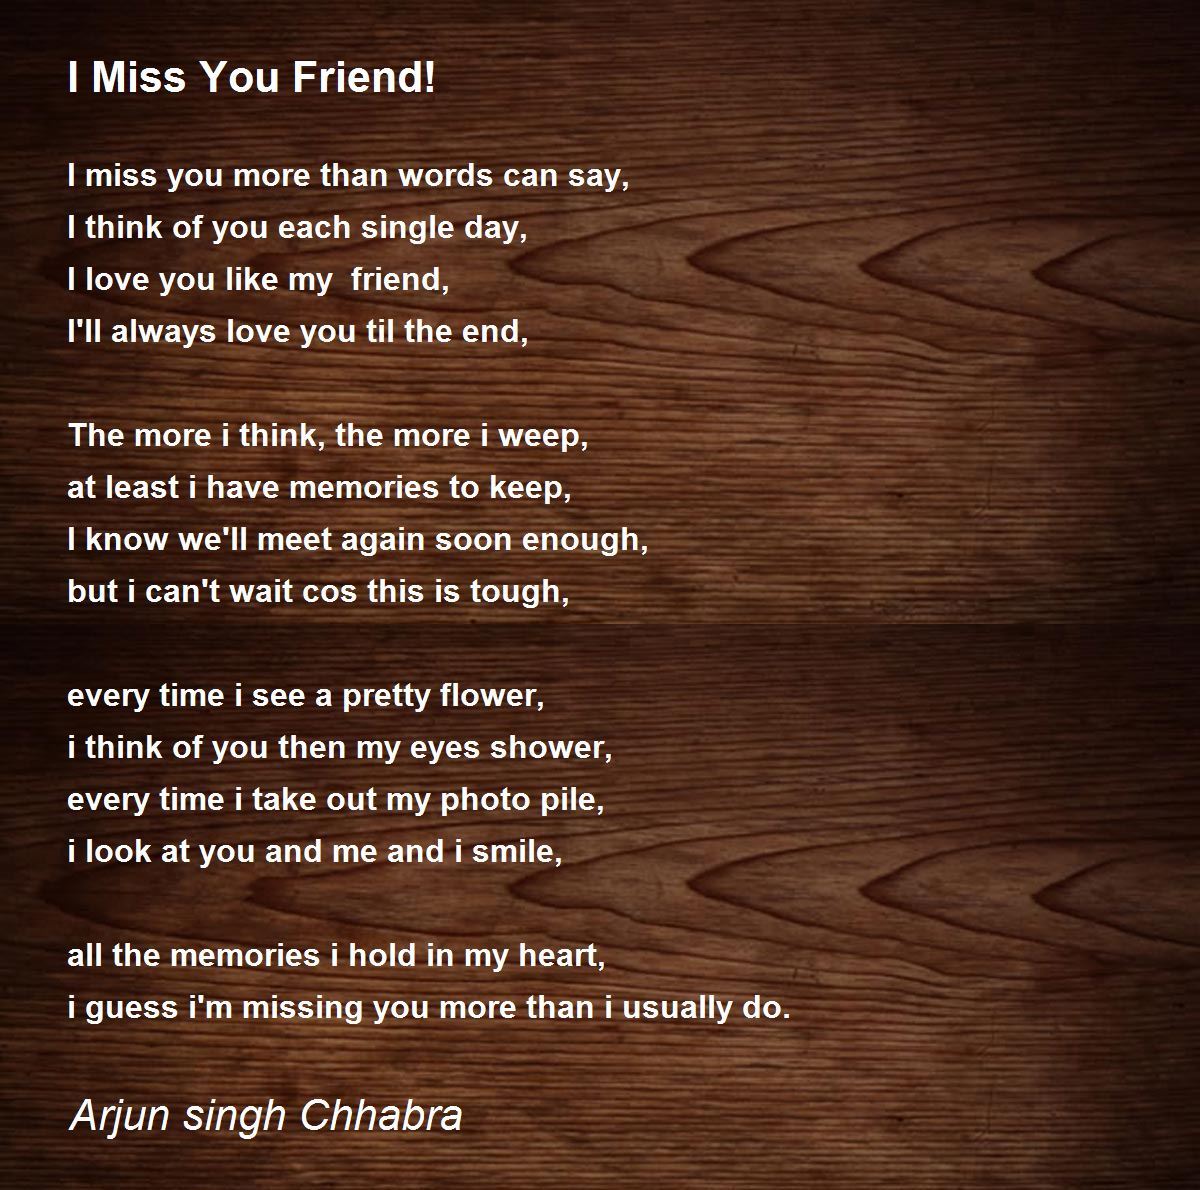 I Miss You Friend! - I Miss You Friend! Poem by Arjun singh Chhabra